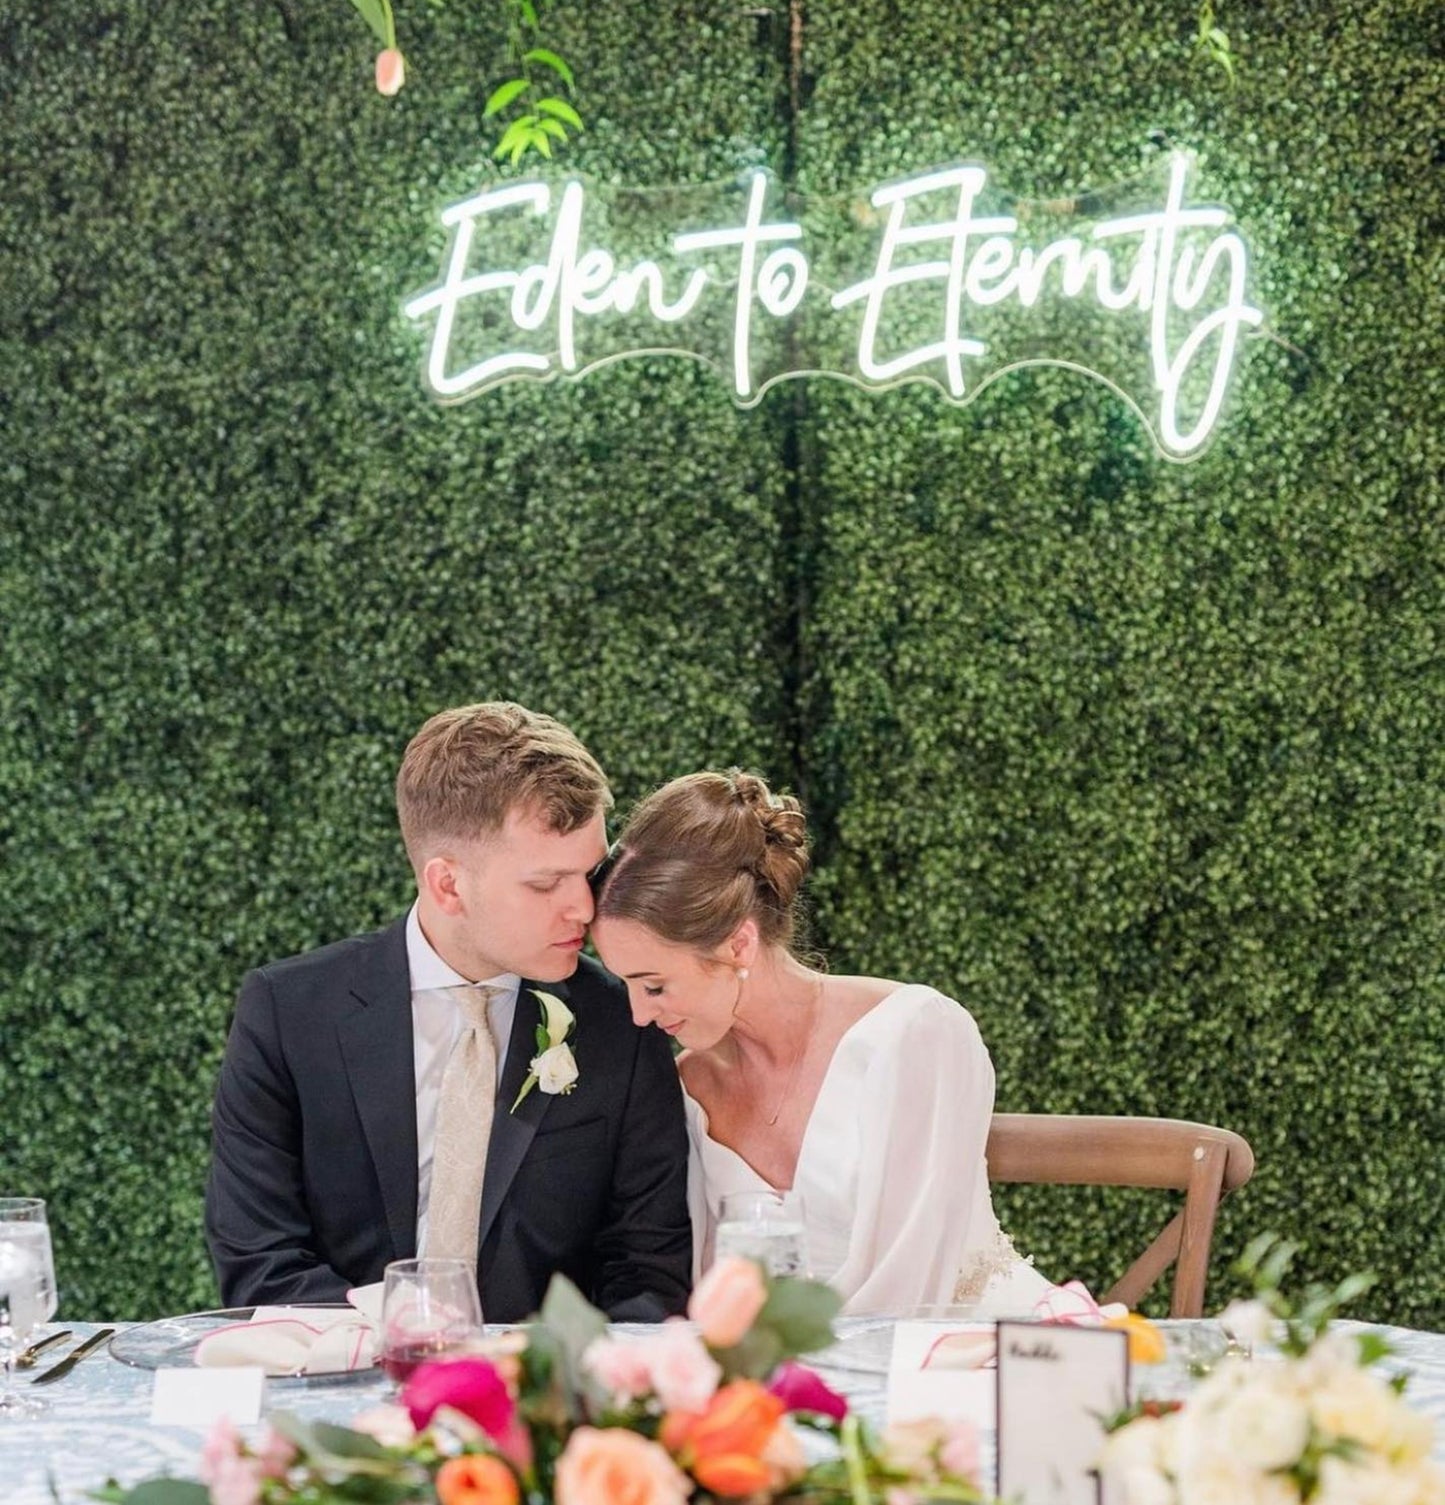 The Eden to Eternity Wedding Neon Sign